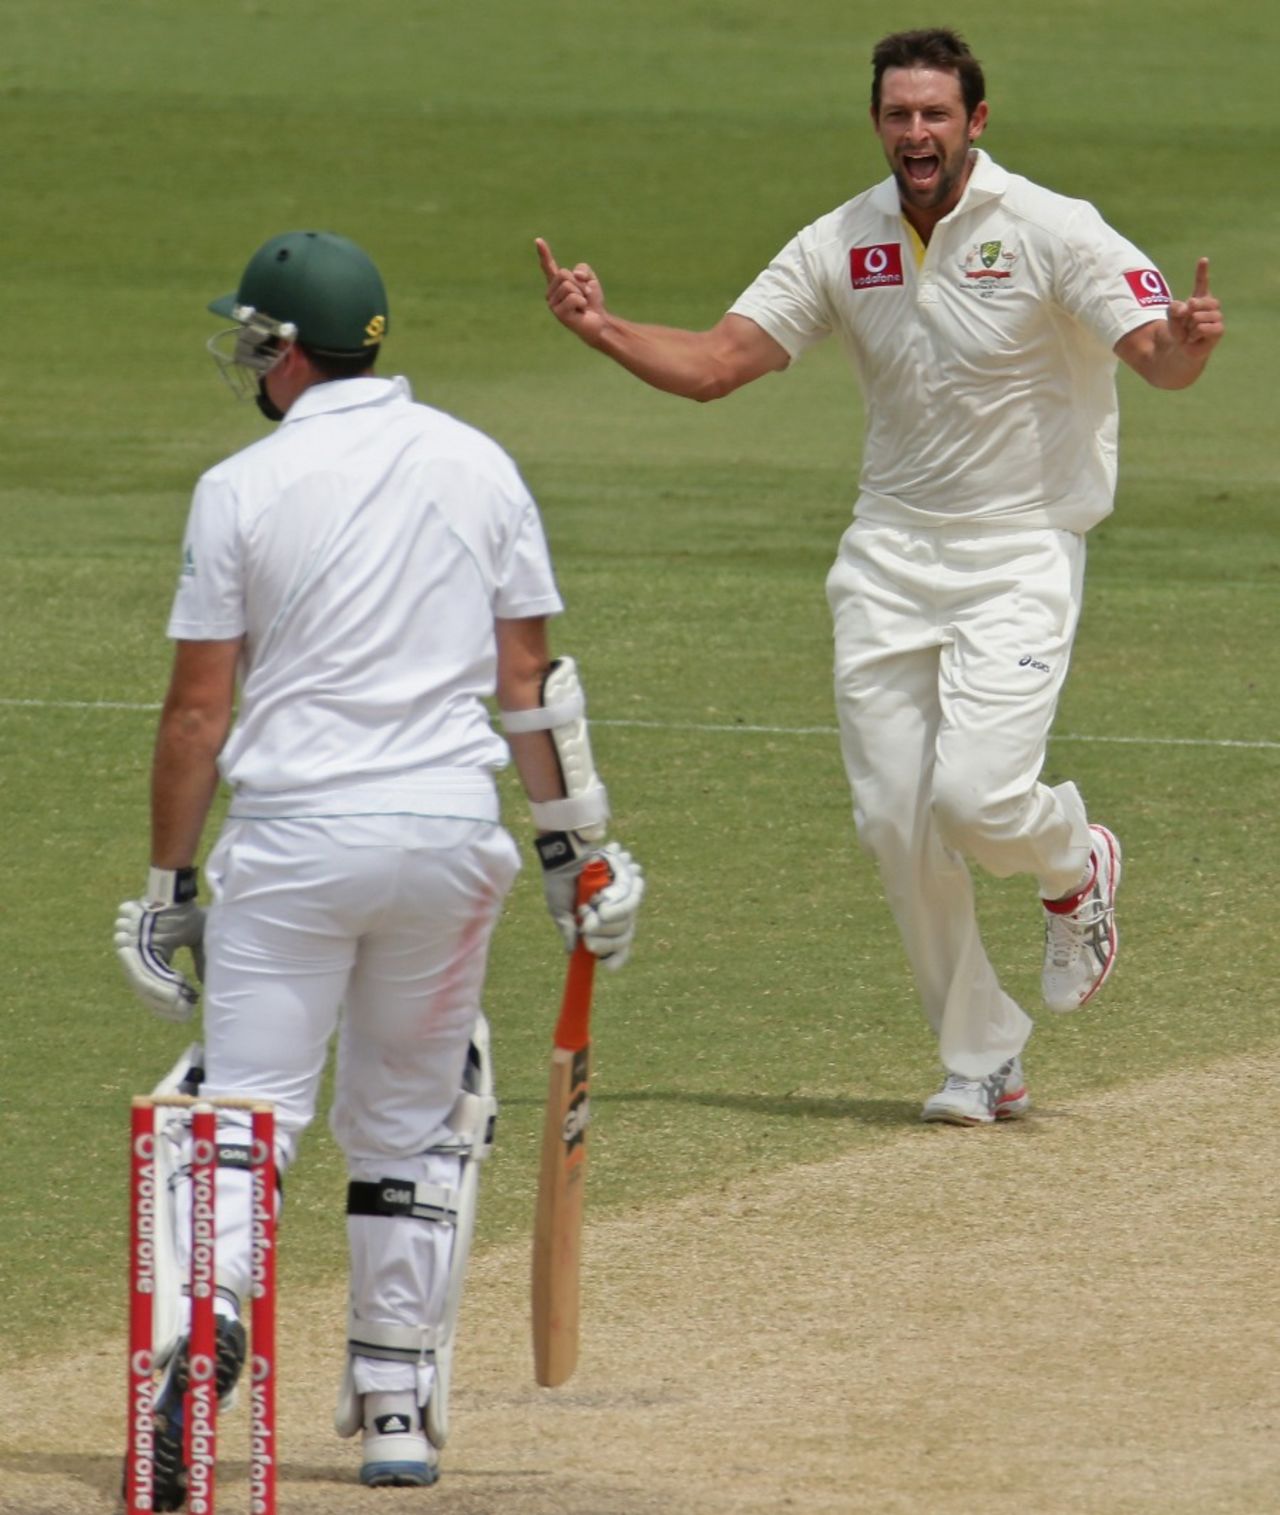 Ben Hilfenhaus celebrates having Graeme Smith caught at slip, Australia v South Africa, 2nd Test, Adelaide, 4th day, November 25, 2012